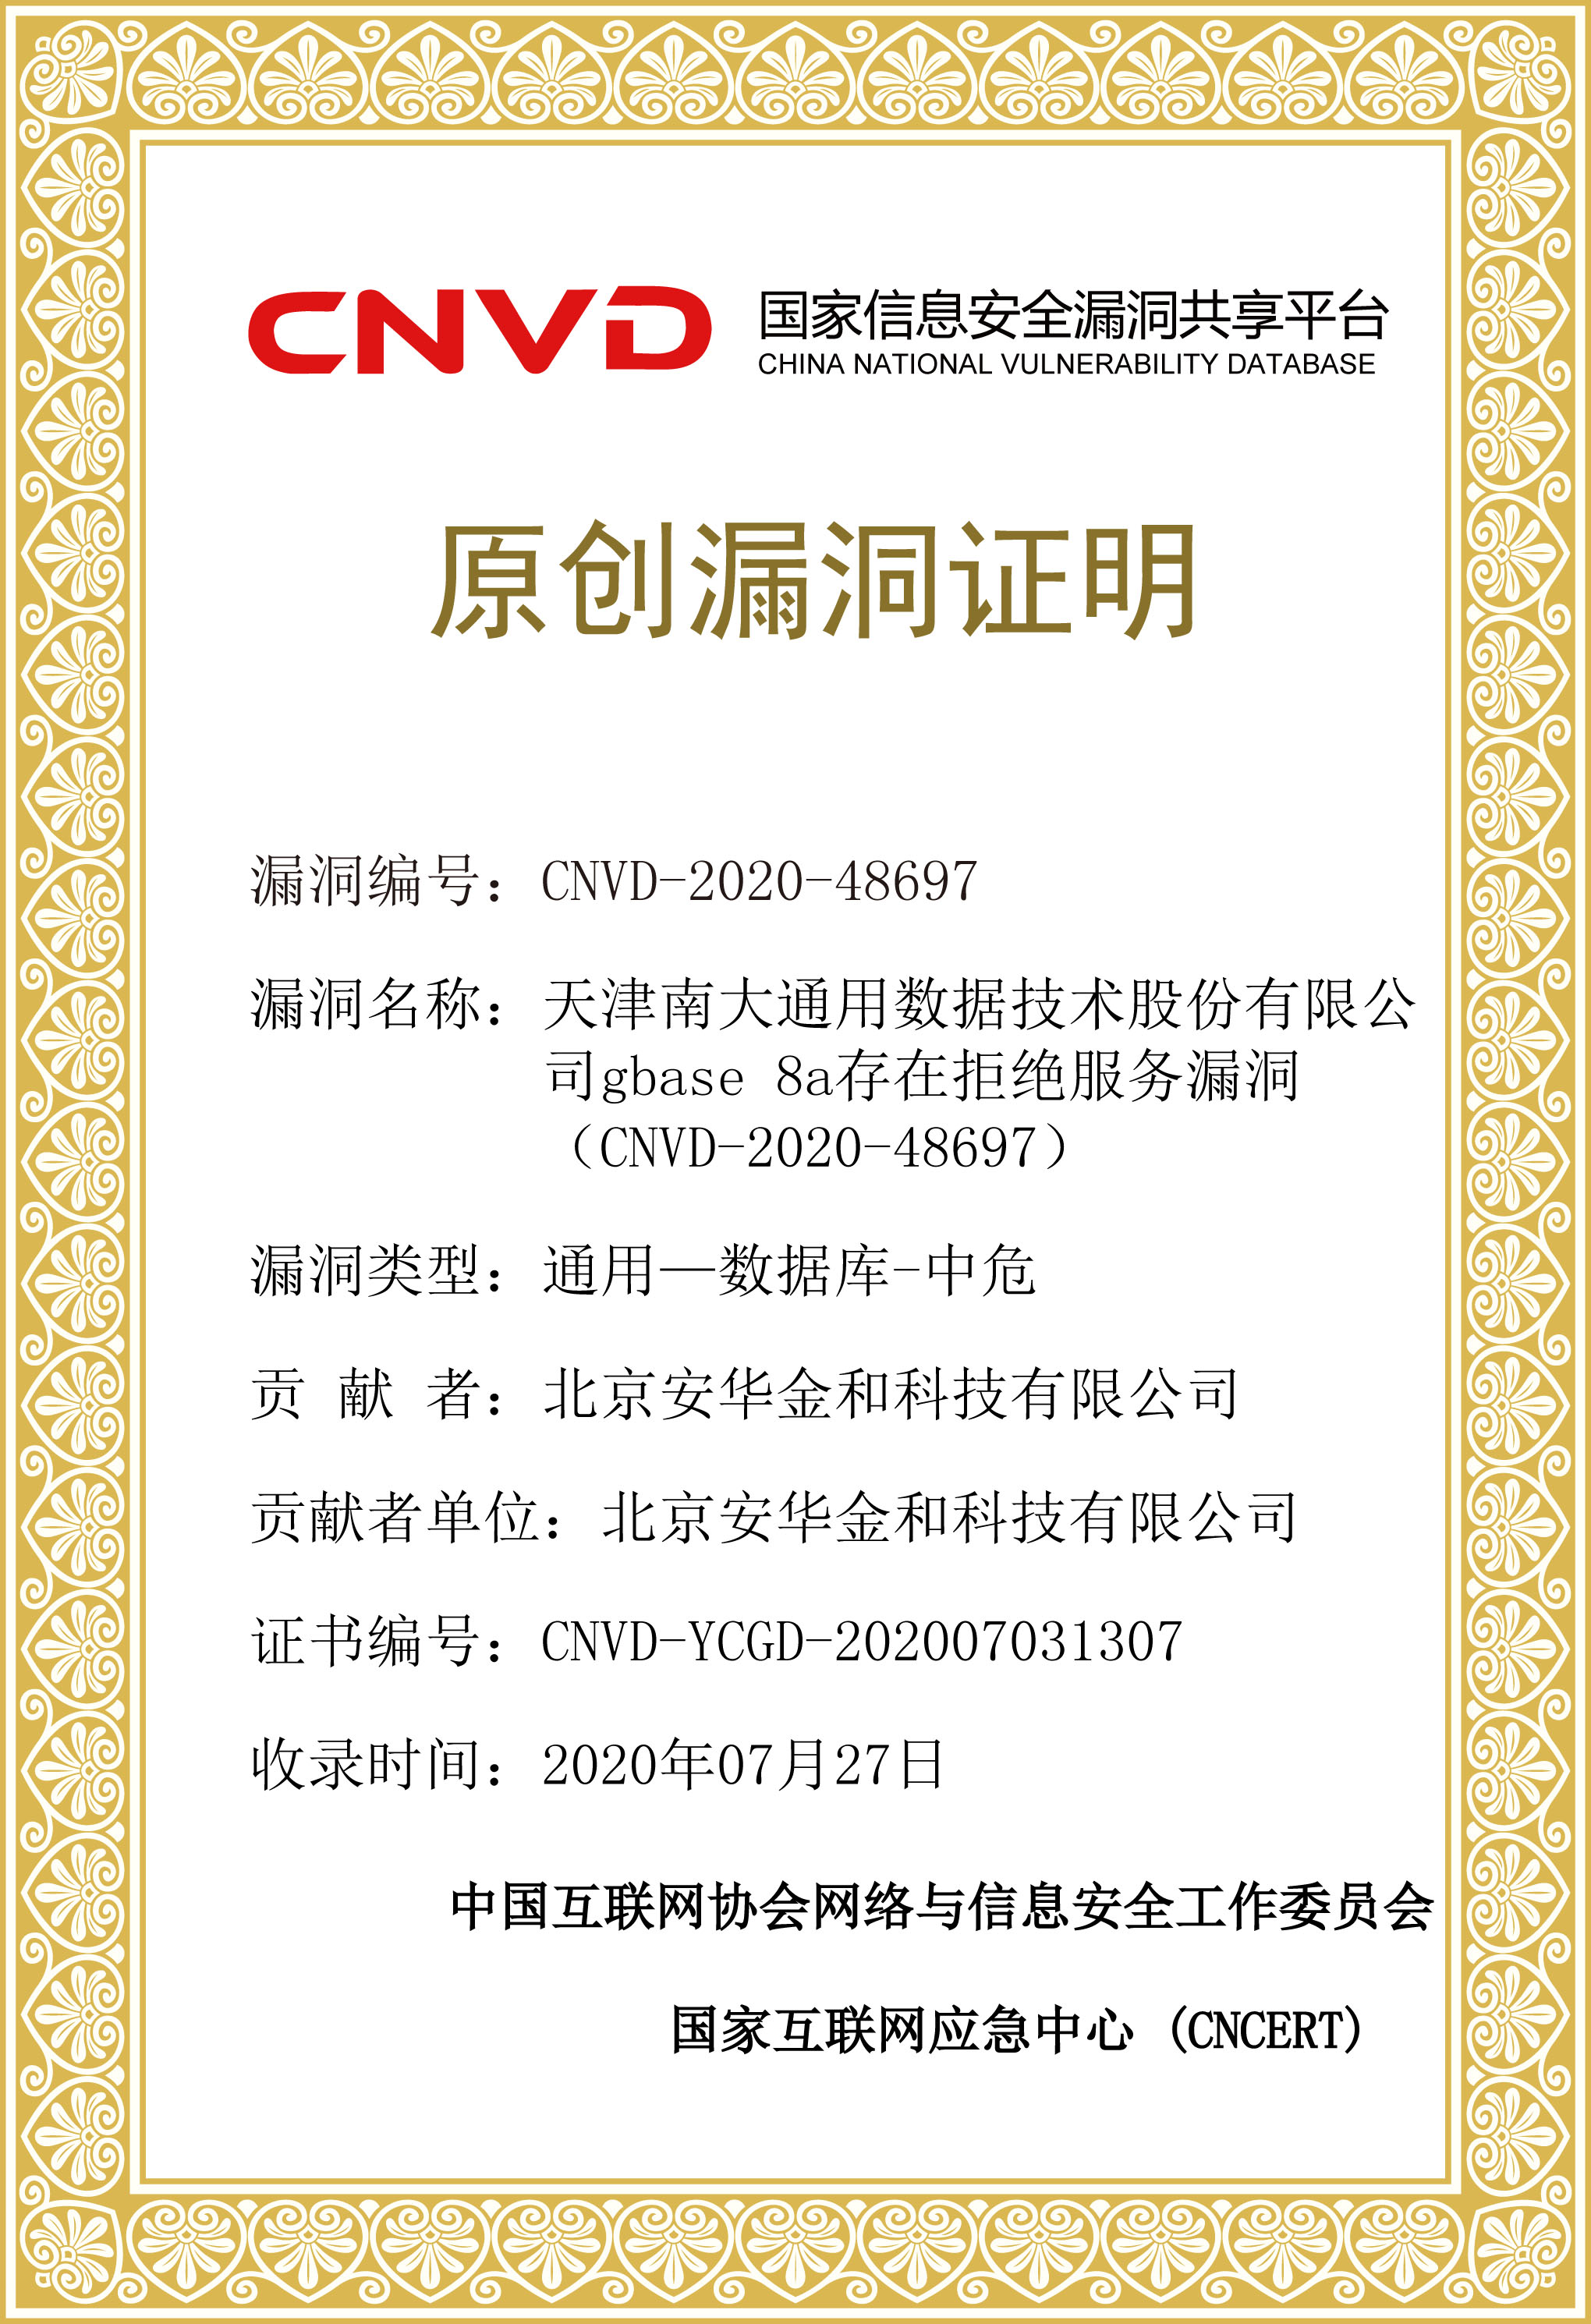 CNVD-YCGD-202007031307